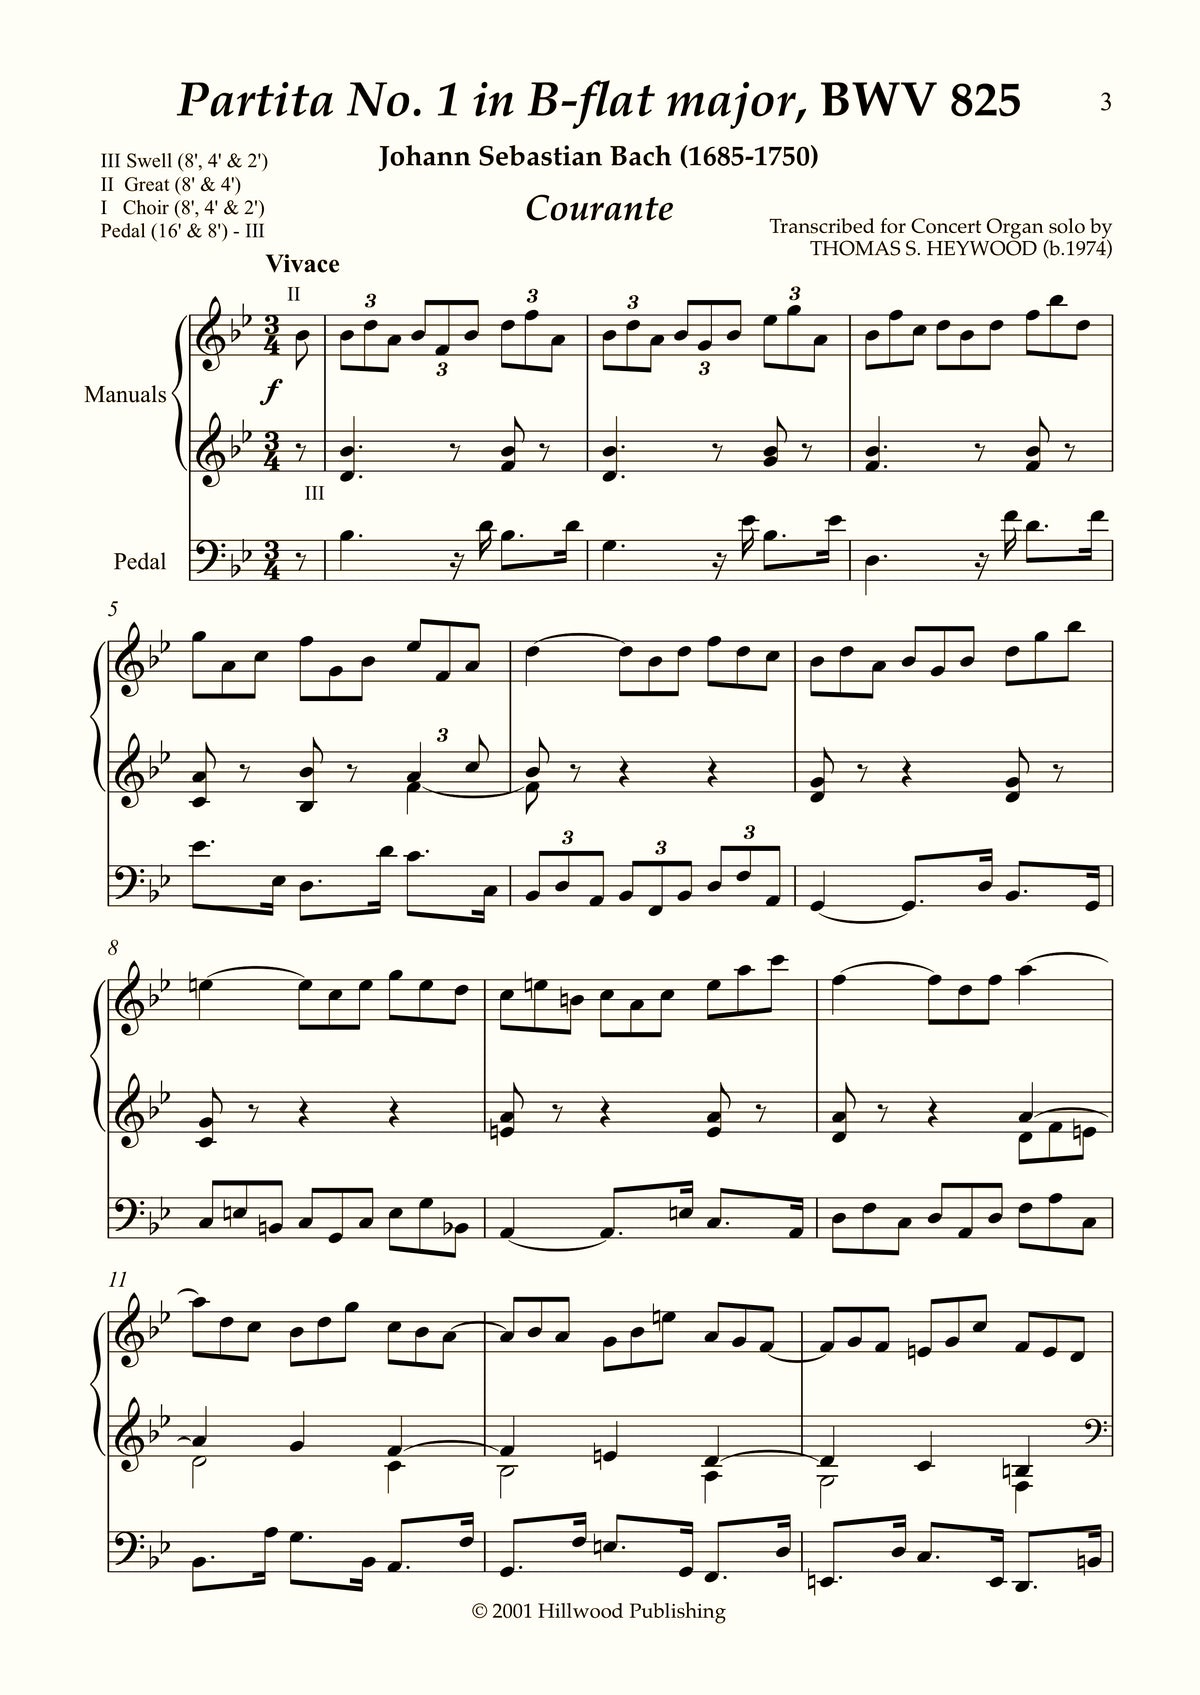 Bach/Heywood - Courante from Partita No. 1 in B-flat major, BWV 825 (Score) | Thomas Heywood | Concert Organ International